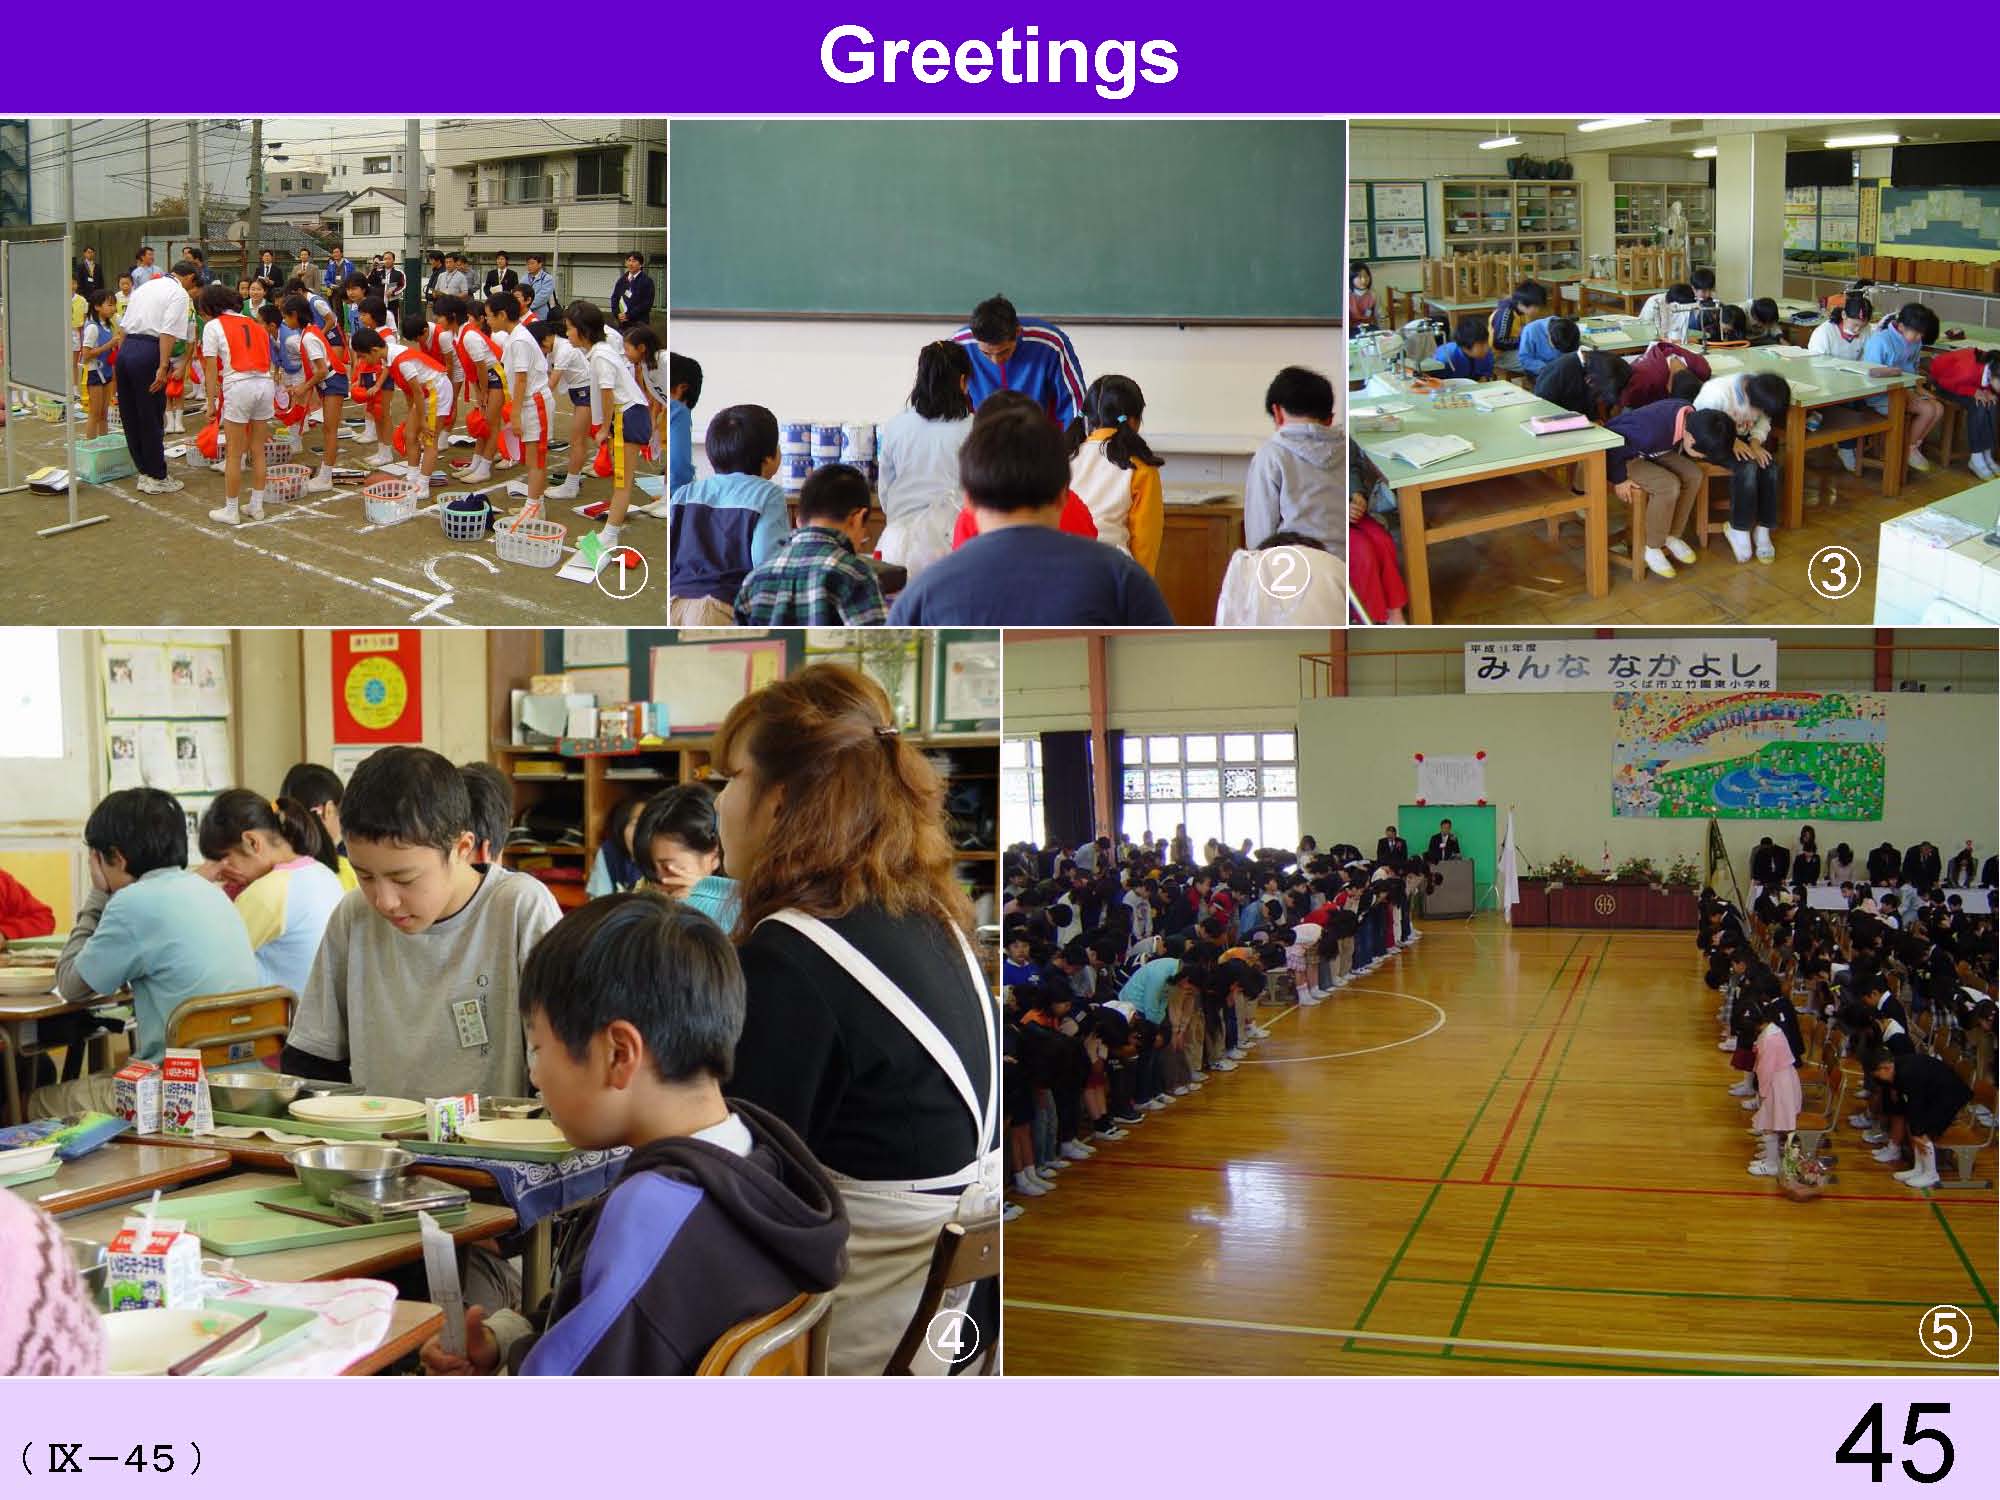 IX Japanese School life and Culture